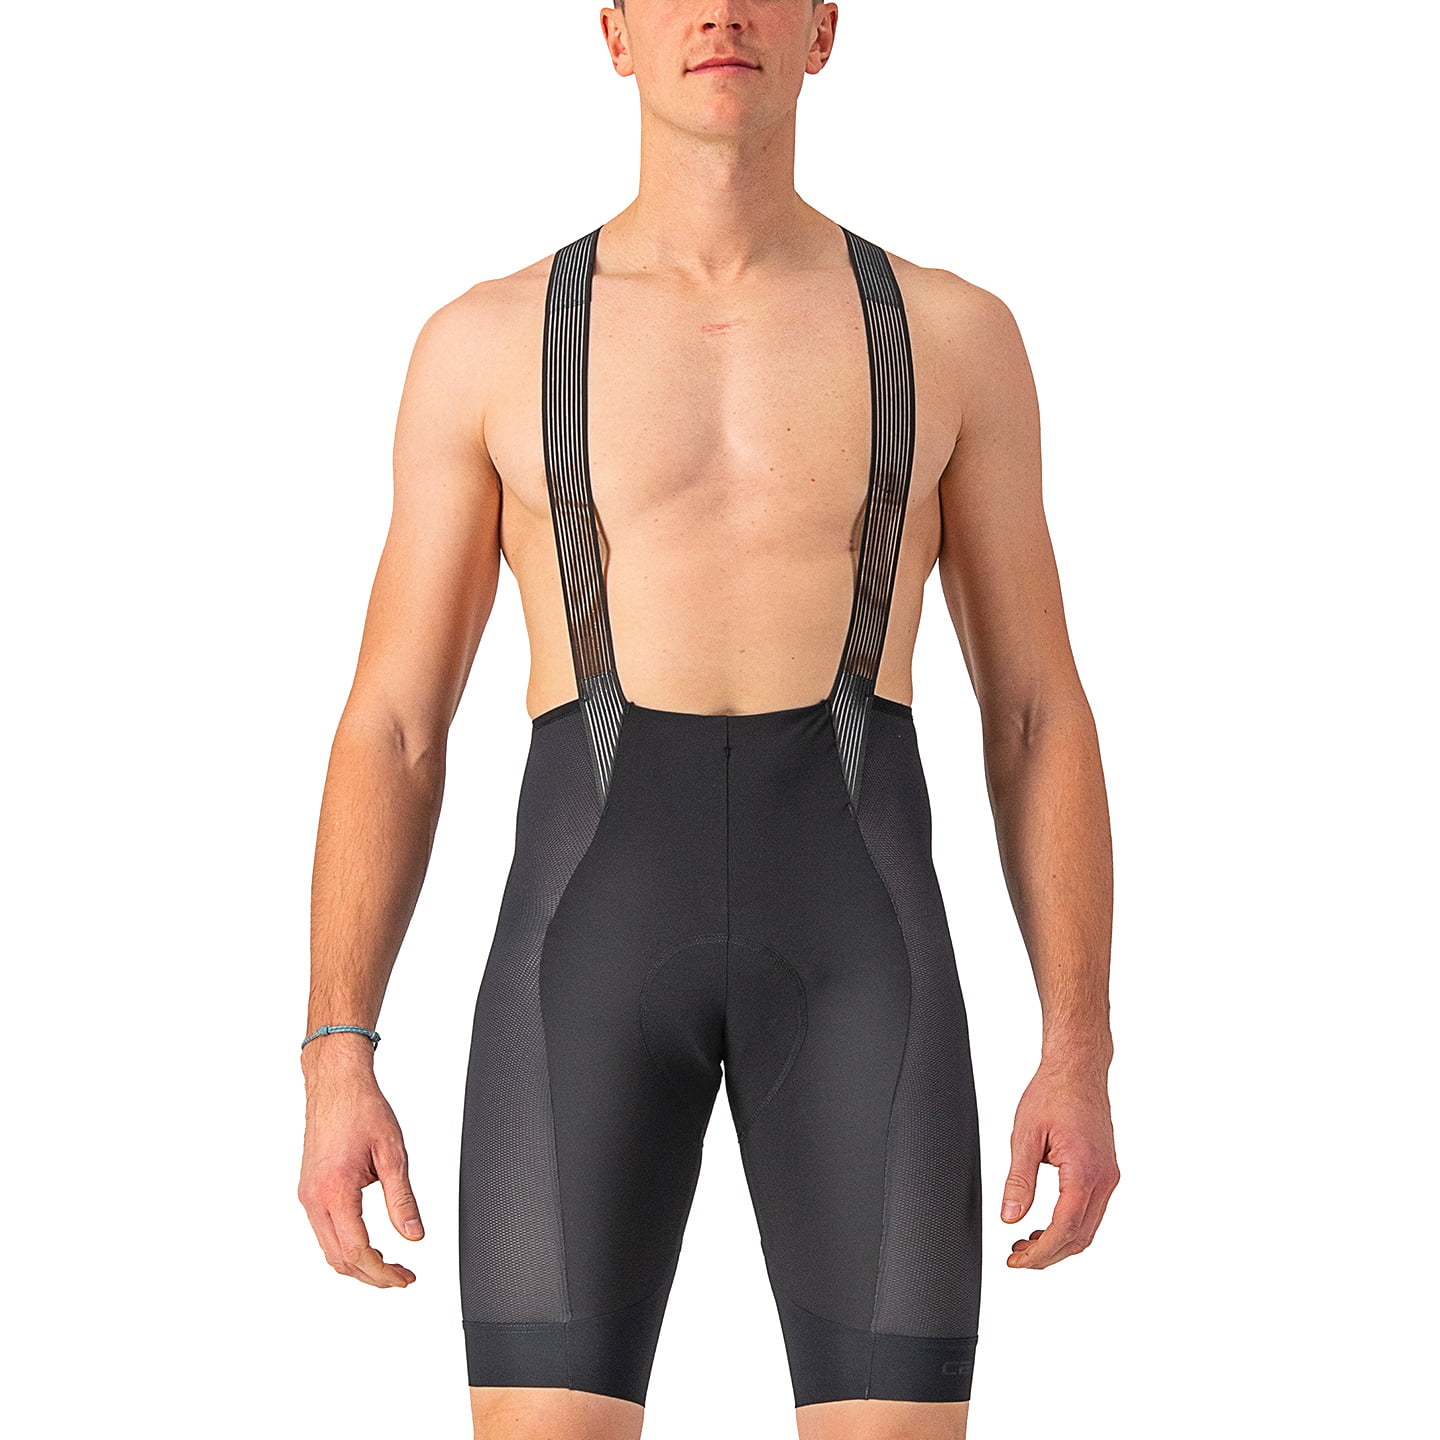 CASTELLI Insider 2 Bib Shorts Bib Shorts, for men, size 2XL, Cycle shorts, Cycling clothing